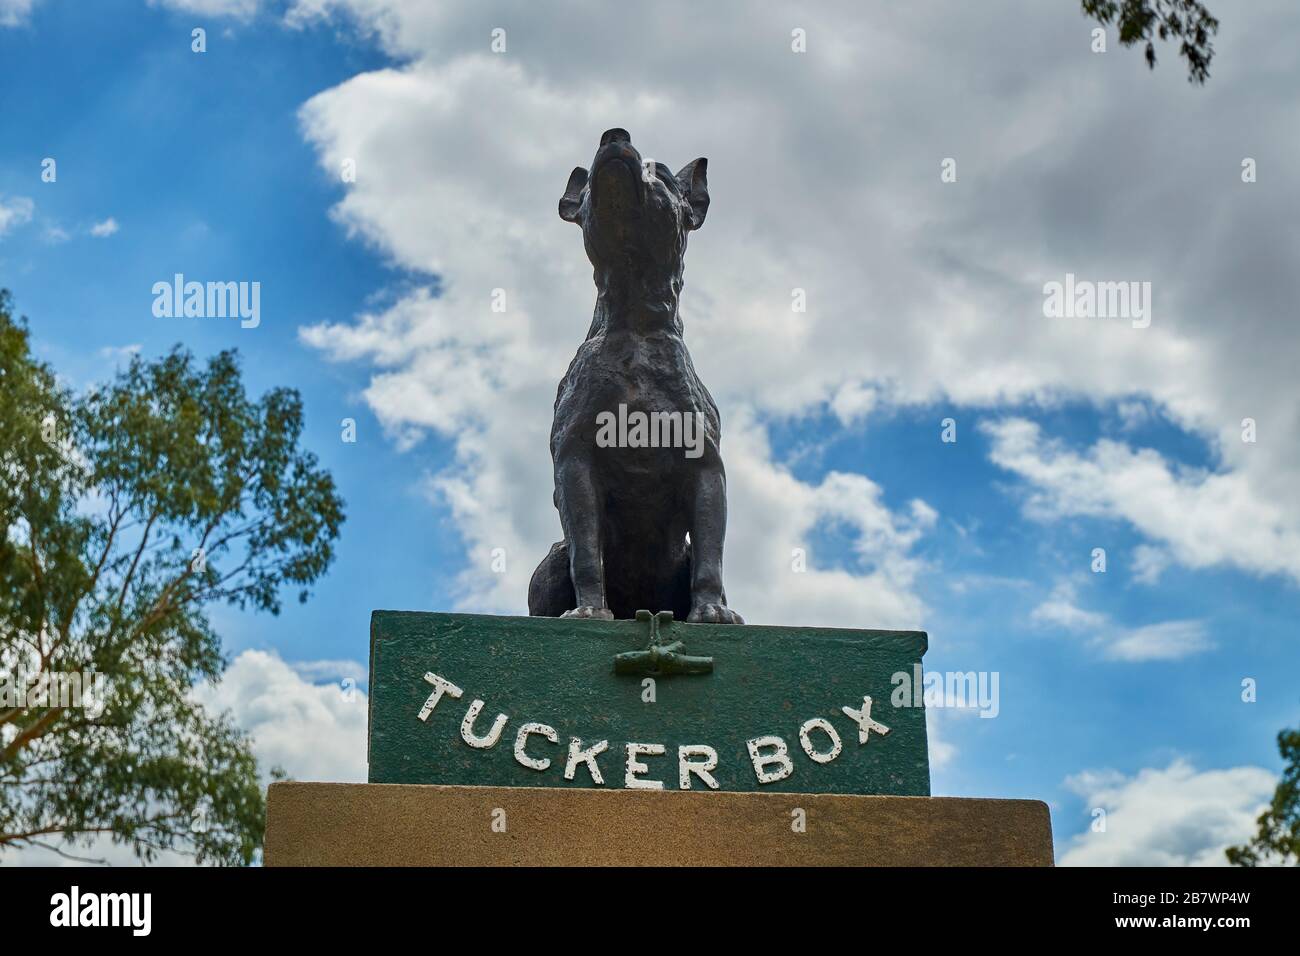 The famous Dog on a Tucker Box statue, memorial. In Gundagai, NSW, Australia. Stock Photo